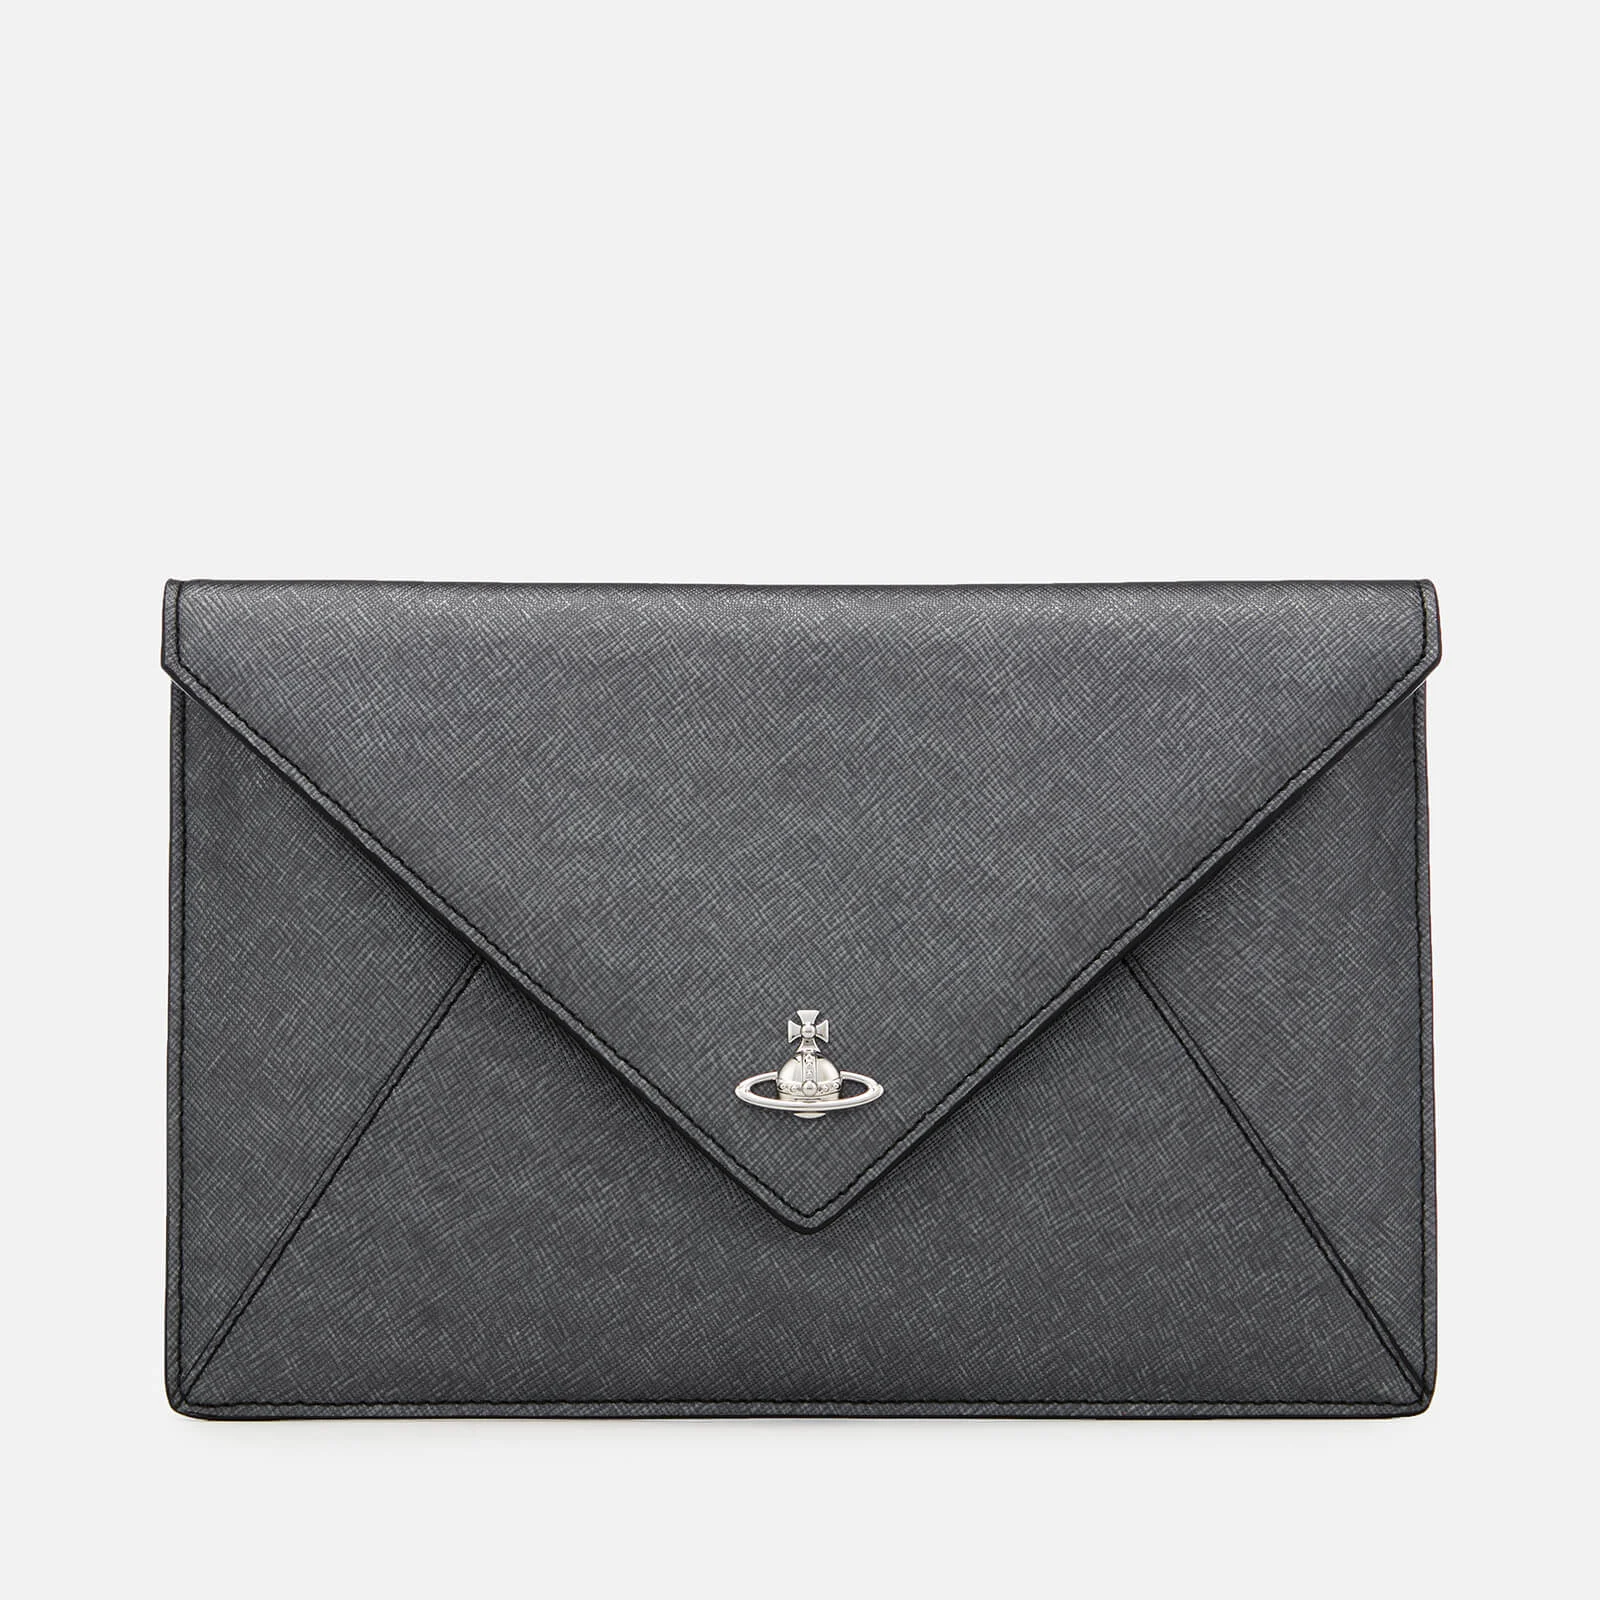 Vivienne Westwood Women's Victoria Envelope Clutch Bag - Anthracite Image 1